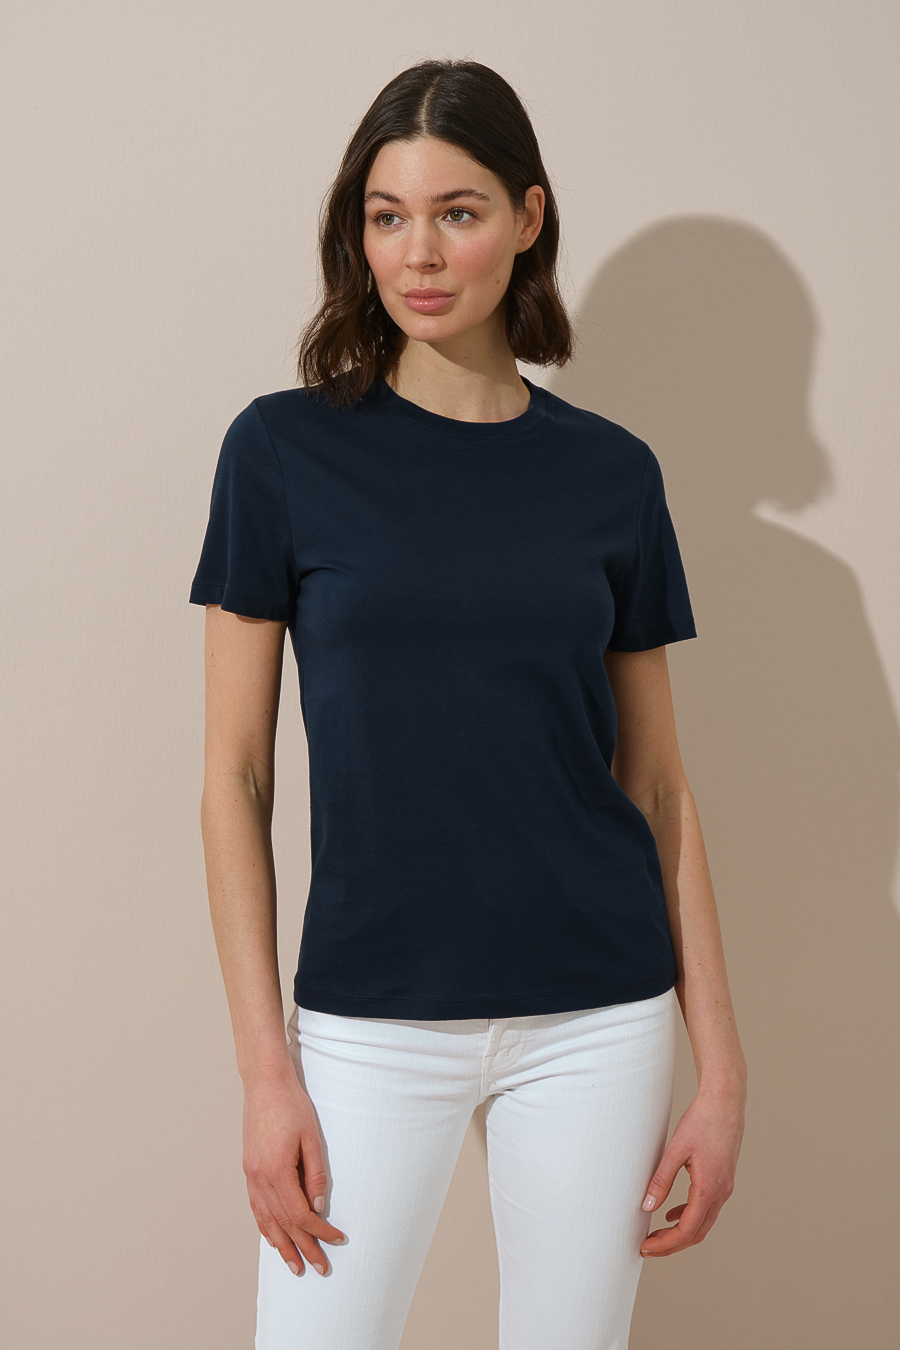 &quot;All-American&quot; Unisex T-shirt in Crispy Cotton